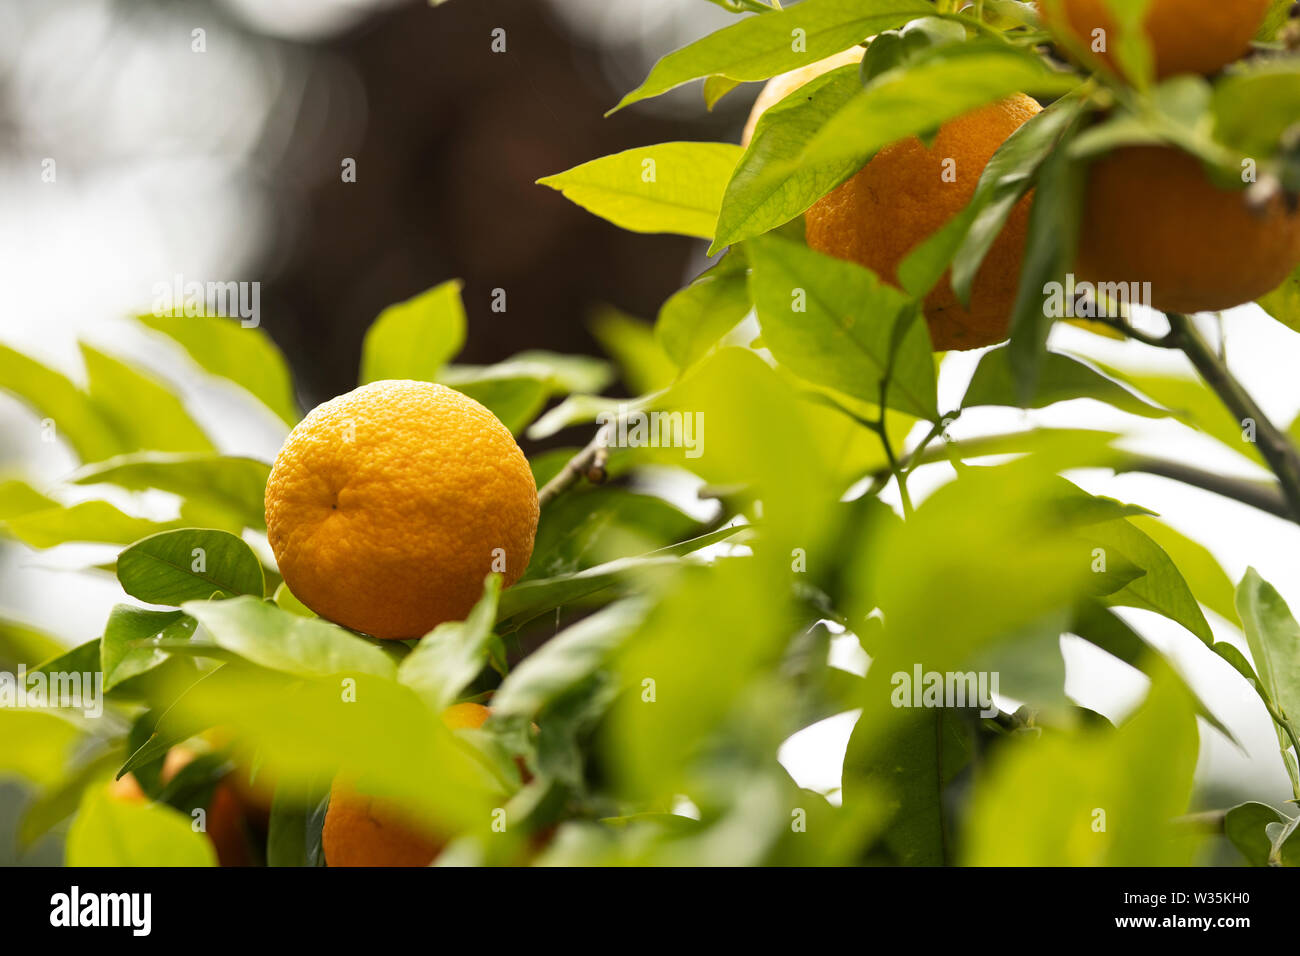 Bitter orange, also known as Seville orange, sour orange, bigarade orange, or marmalade orange (Citrus × aurantium) growing on a tree branch. Stock Photo